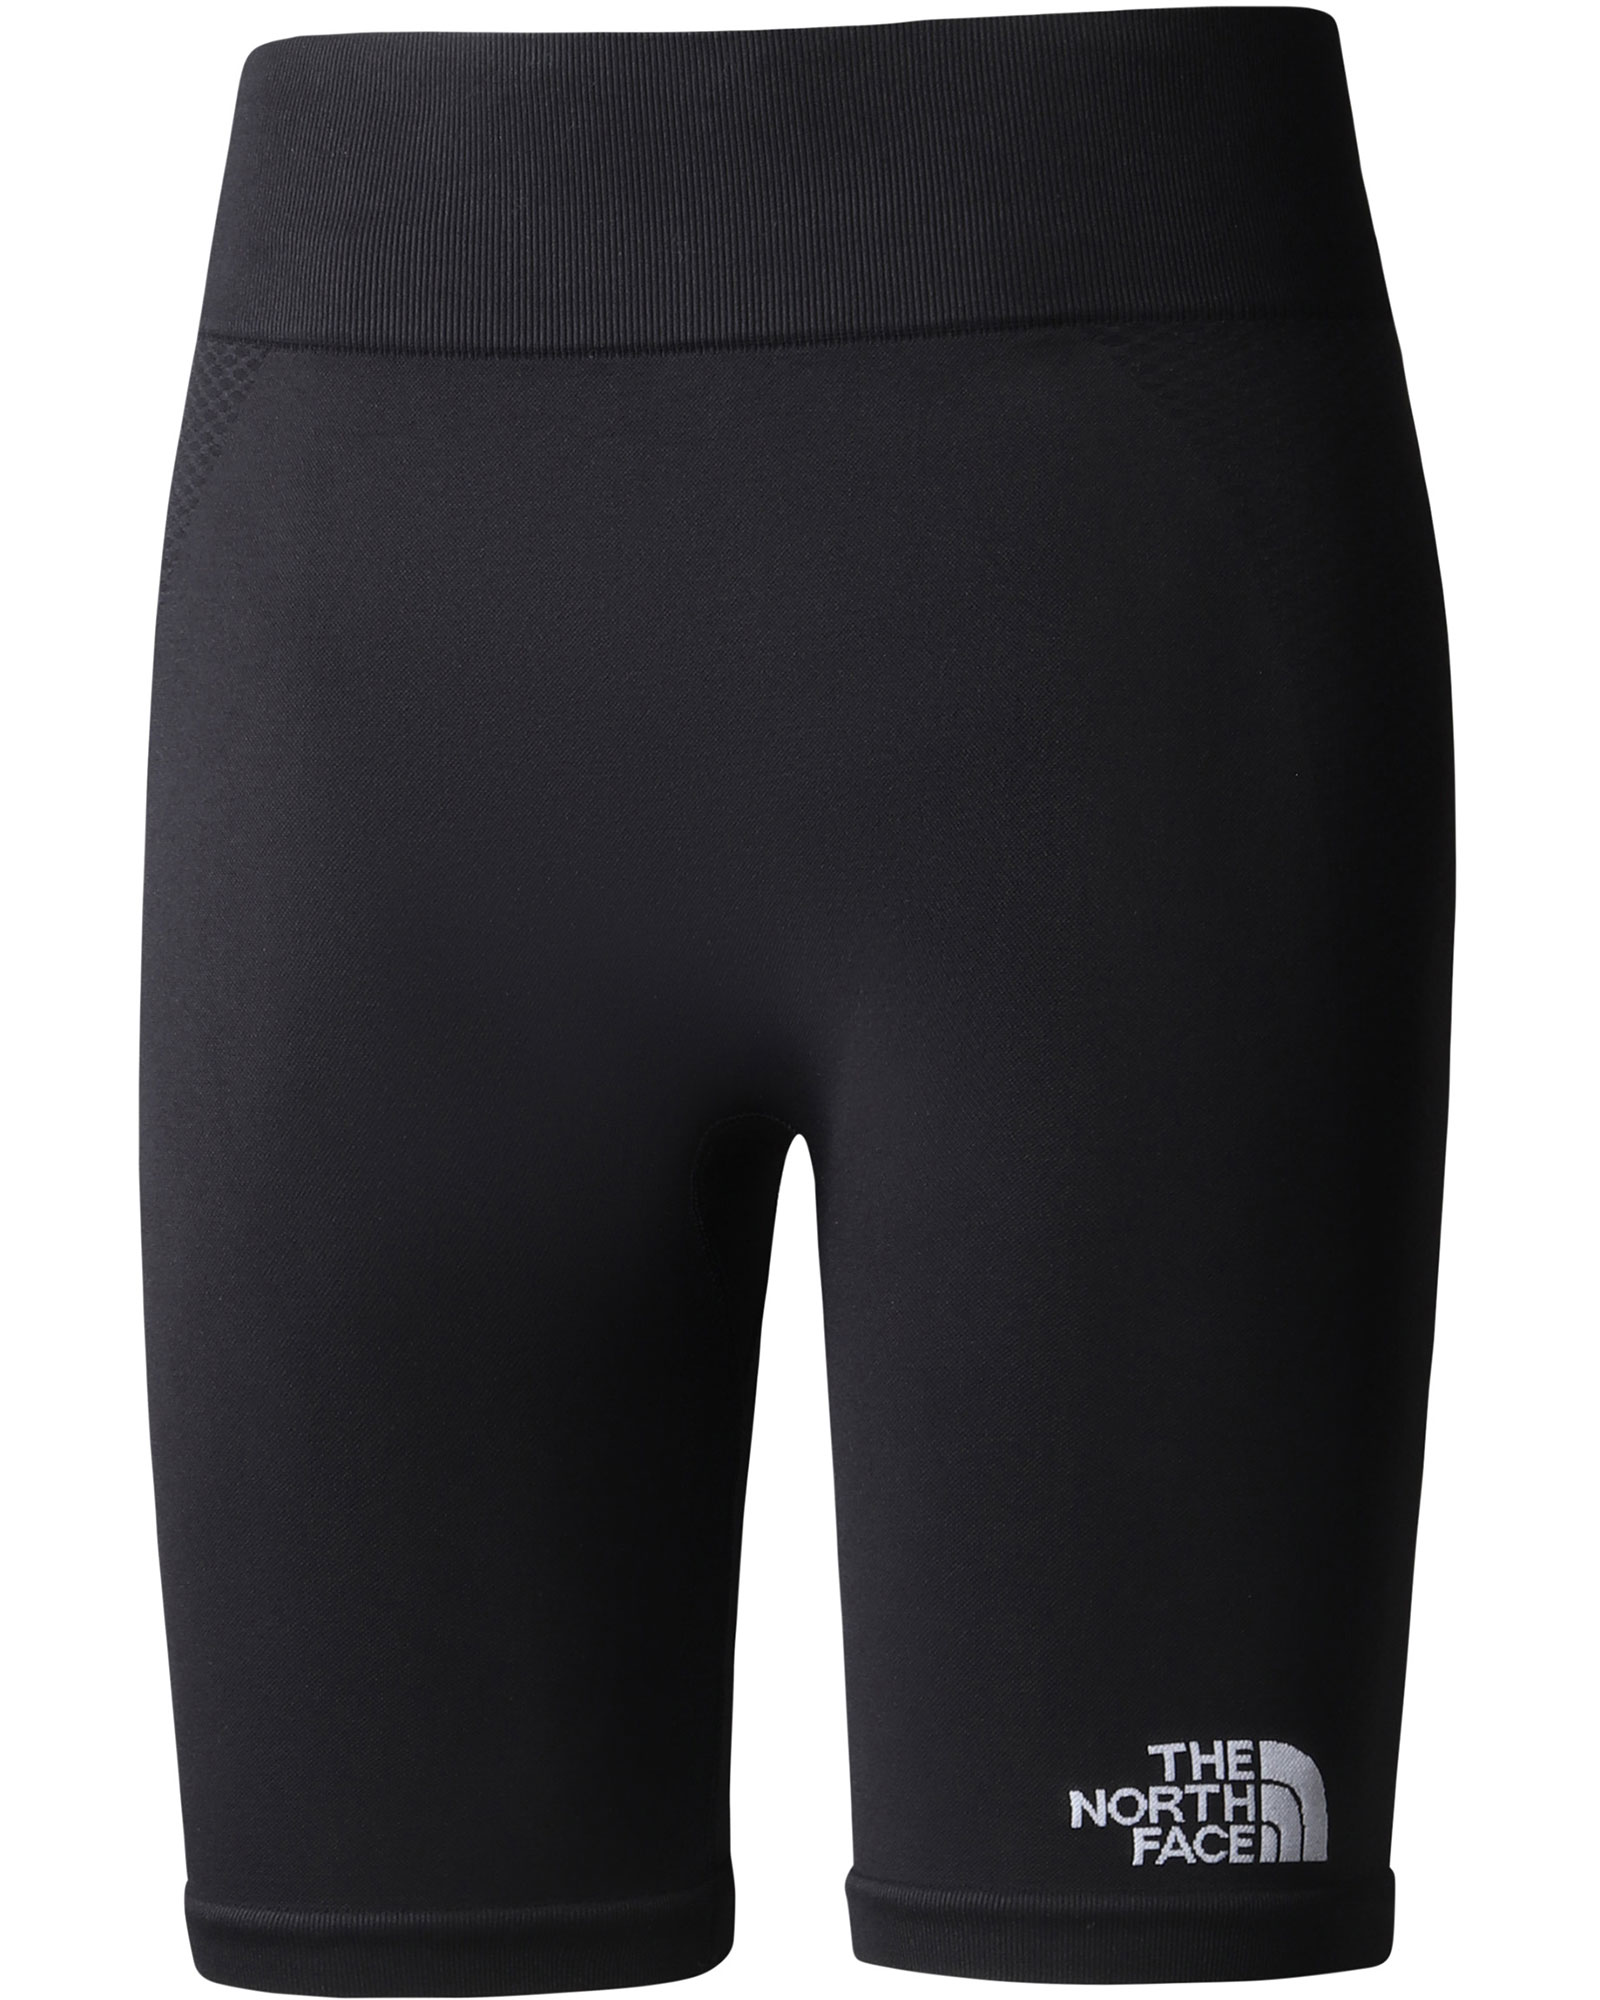 The North Face Women’s Seamless Shorts - TNF Black L/XL